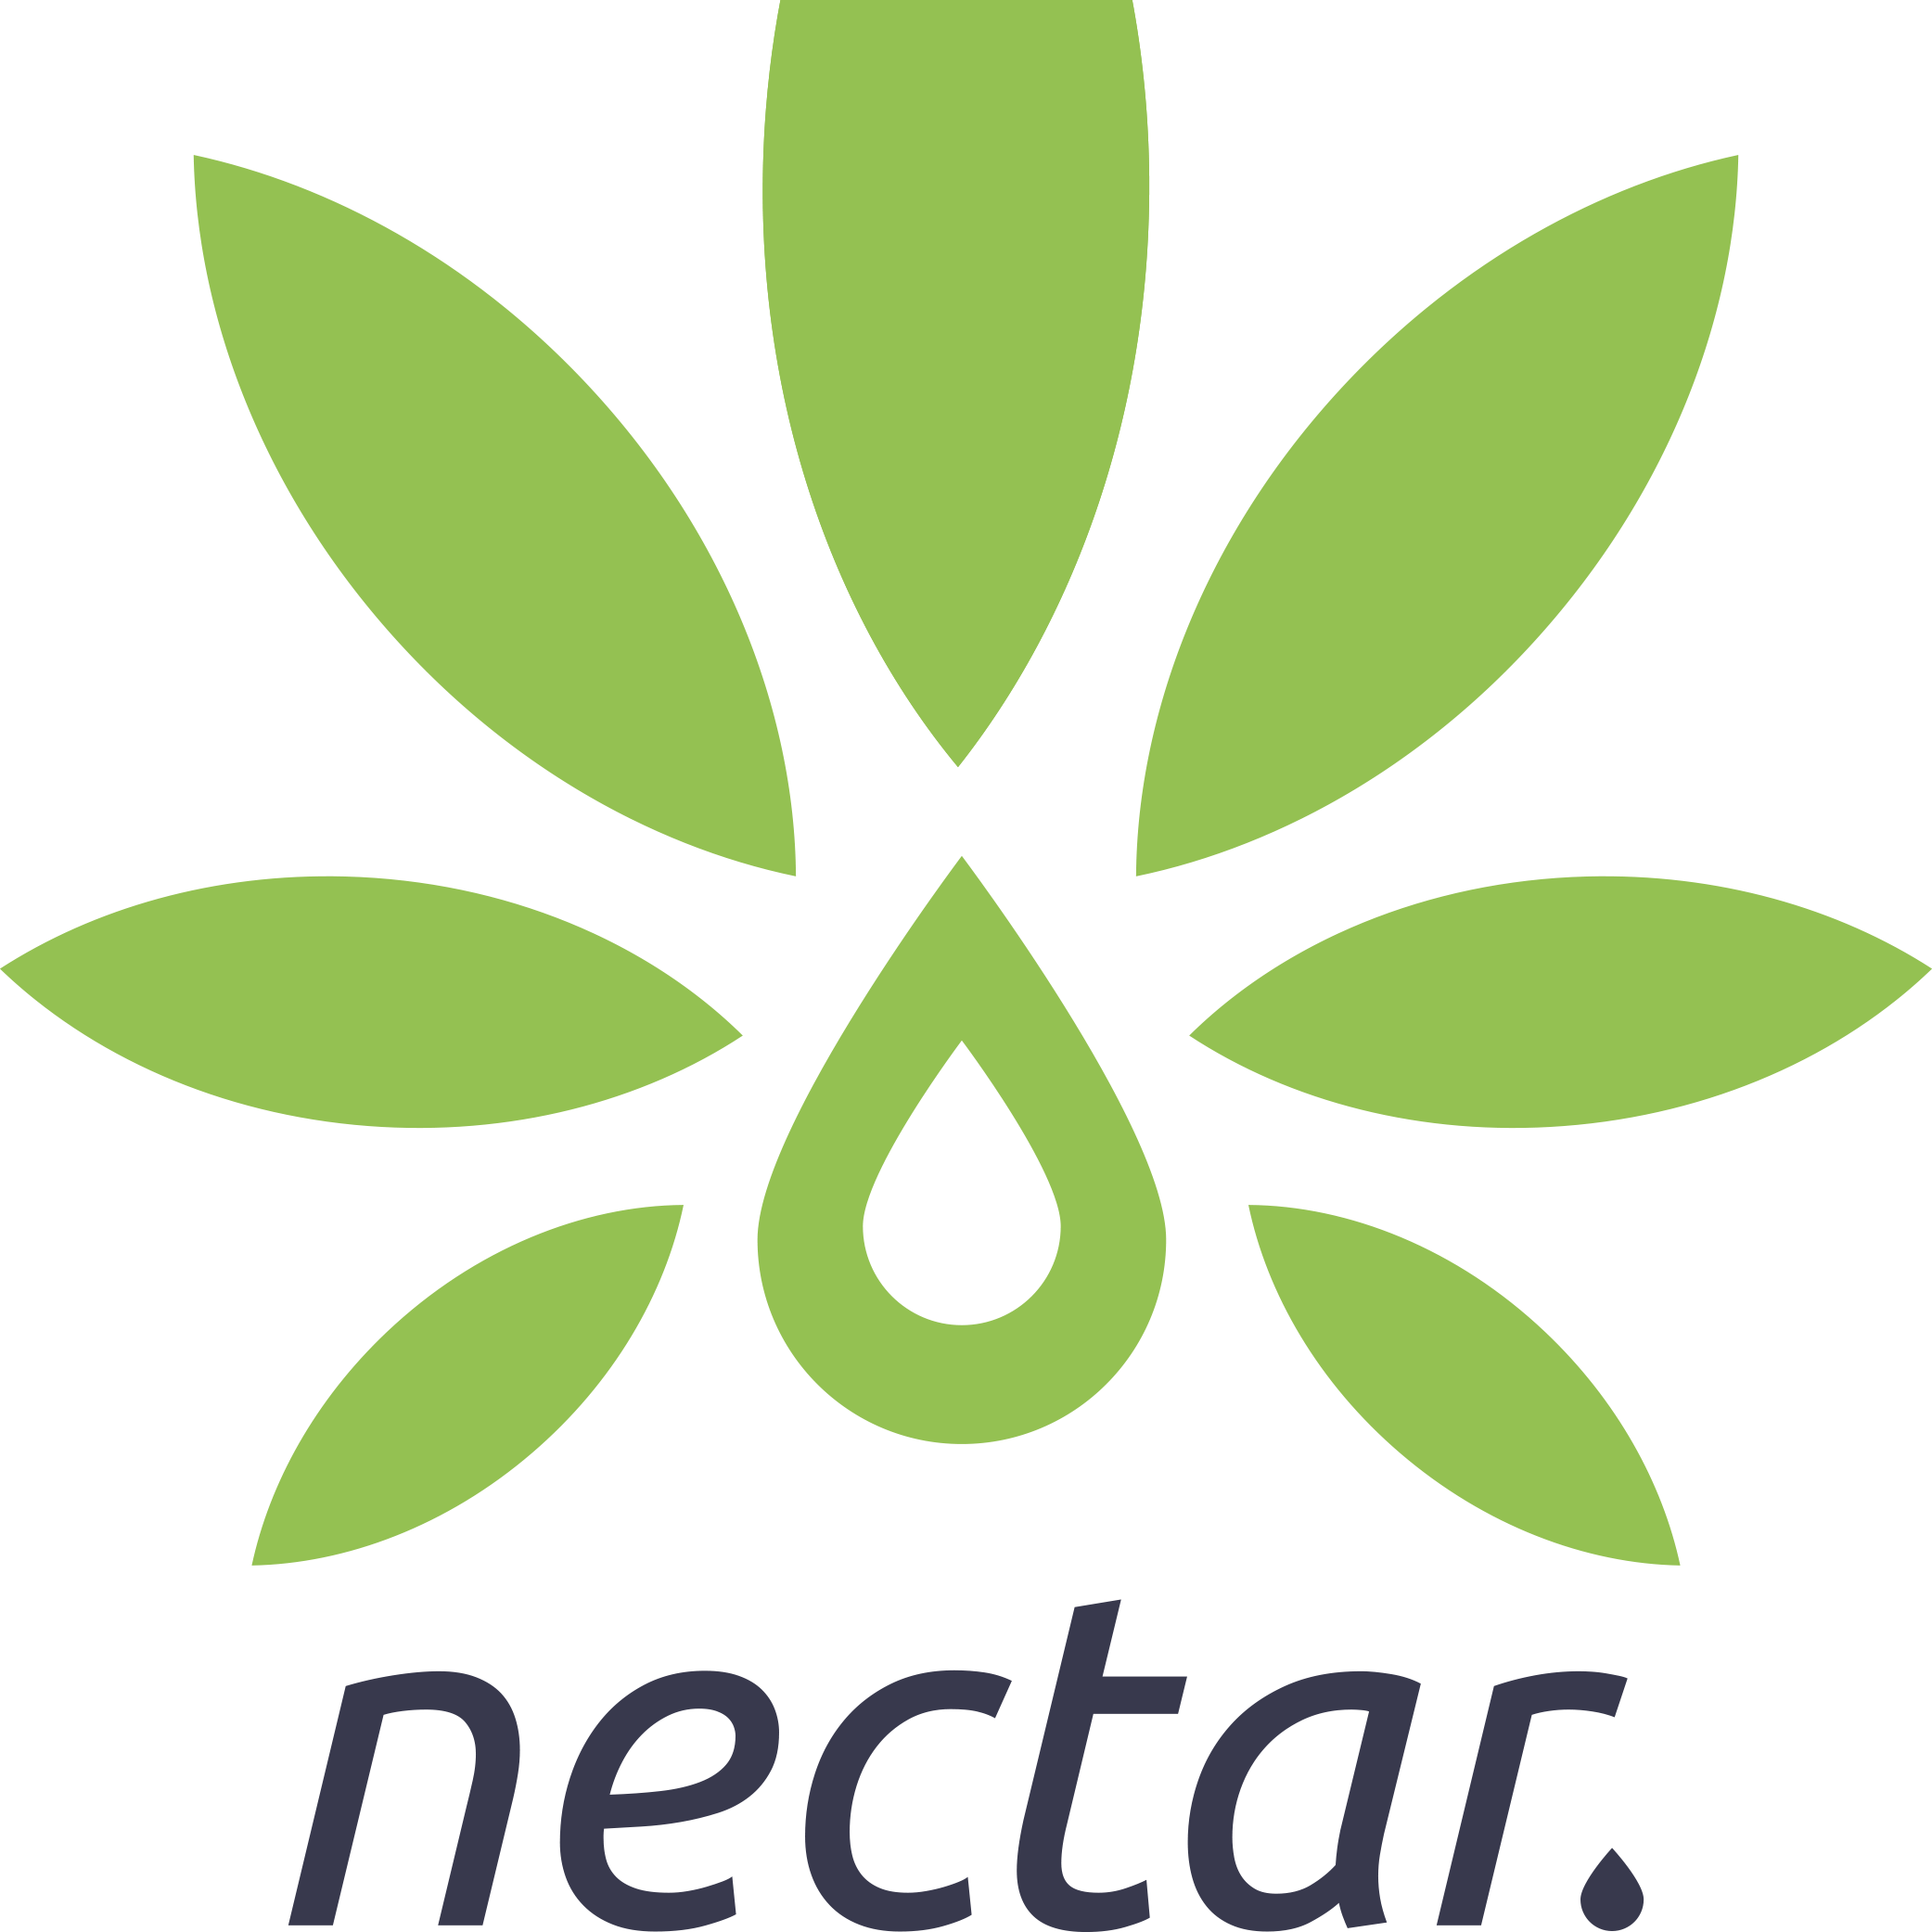 nectar definition